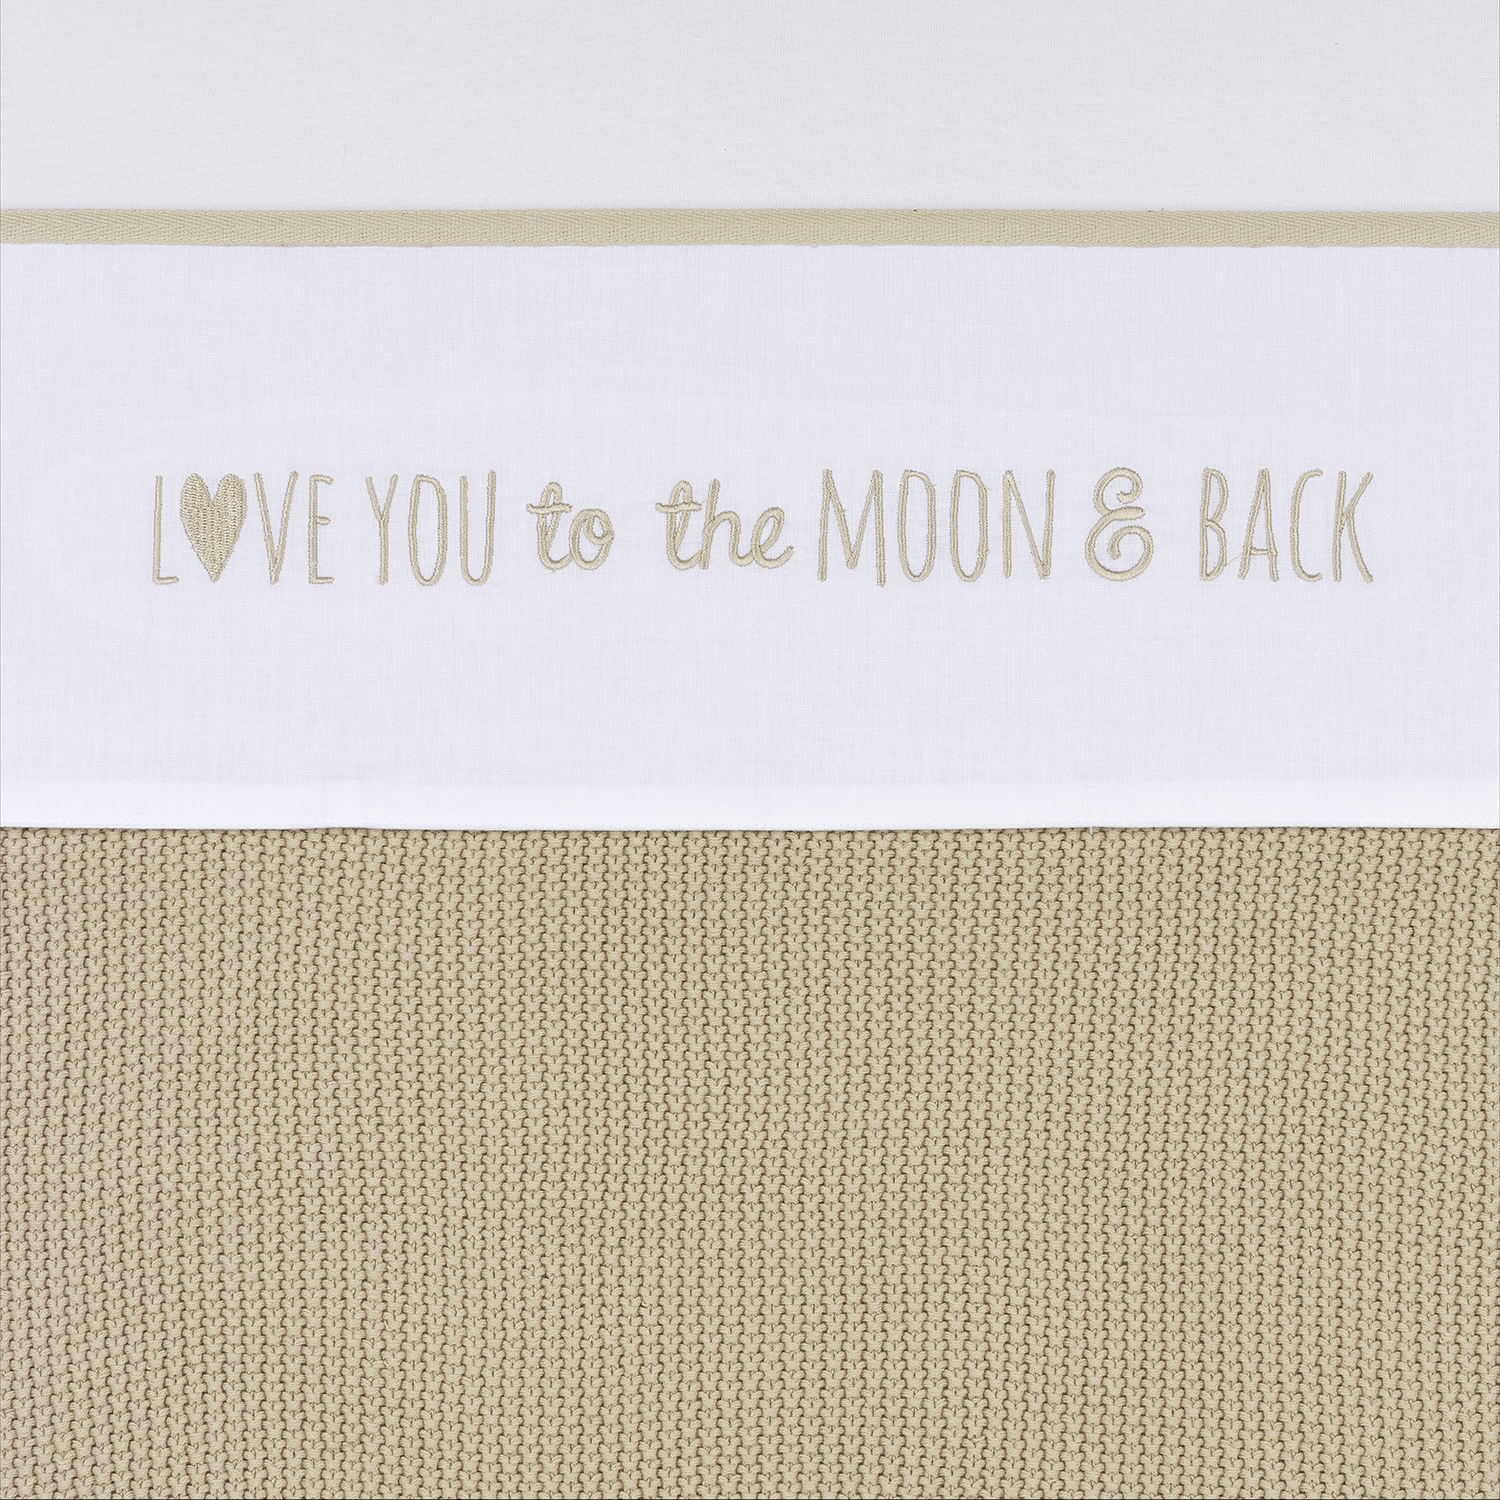 Ledikant laken Love you to the moon & back - sand - 100x150cm